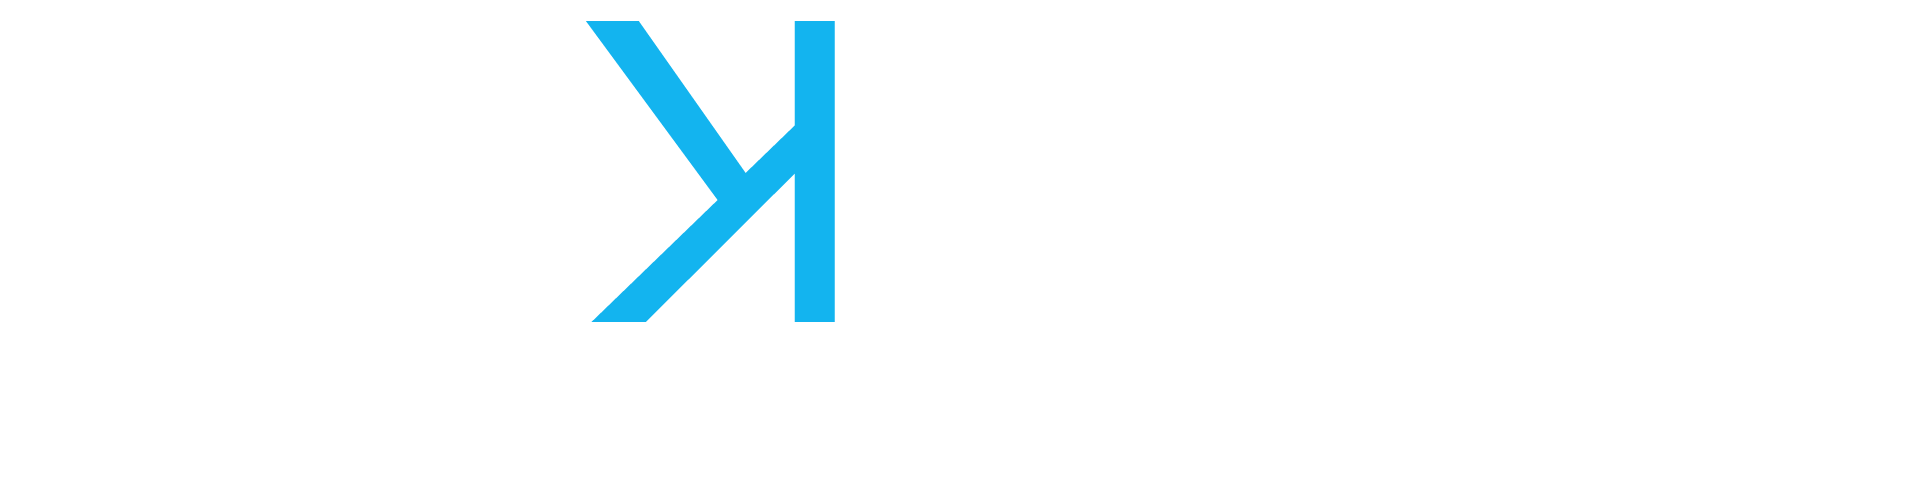 Kevin Kearney Associates Weybridge Surrey logo-cutout